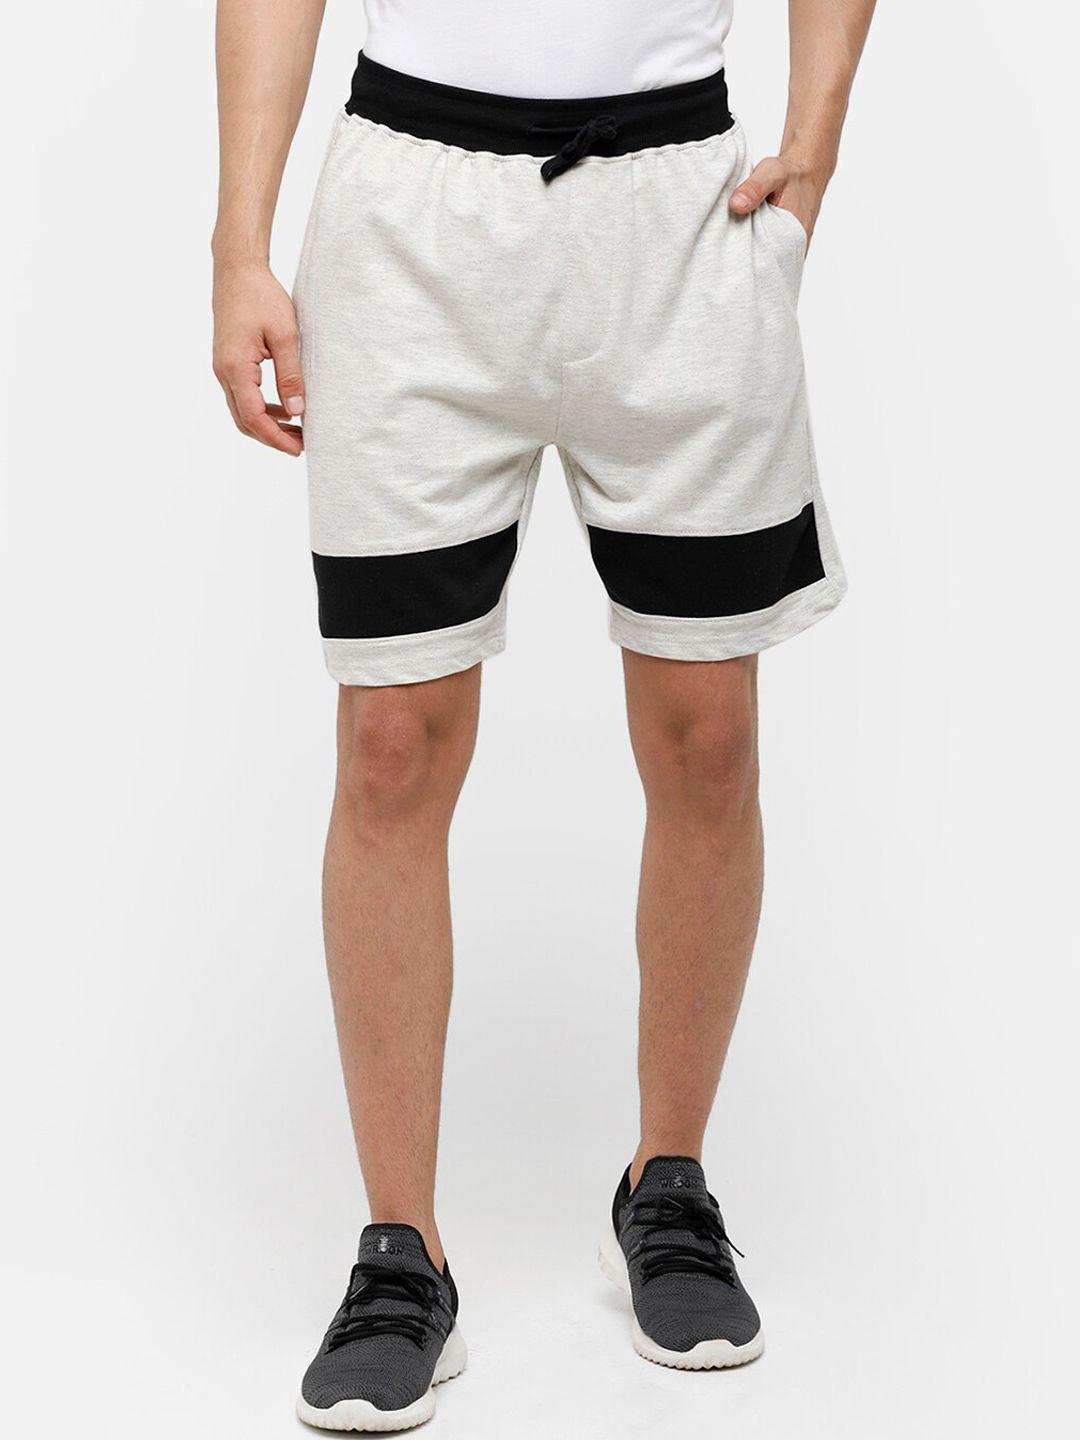 MADSTO Men Colourblocked Pure Cotton Sports Shorts